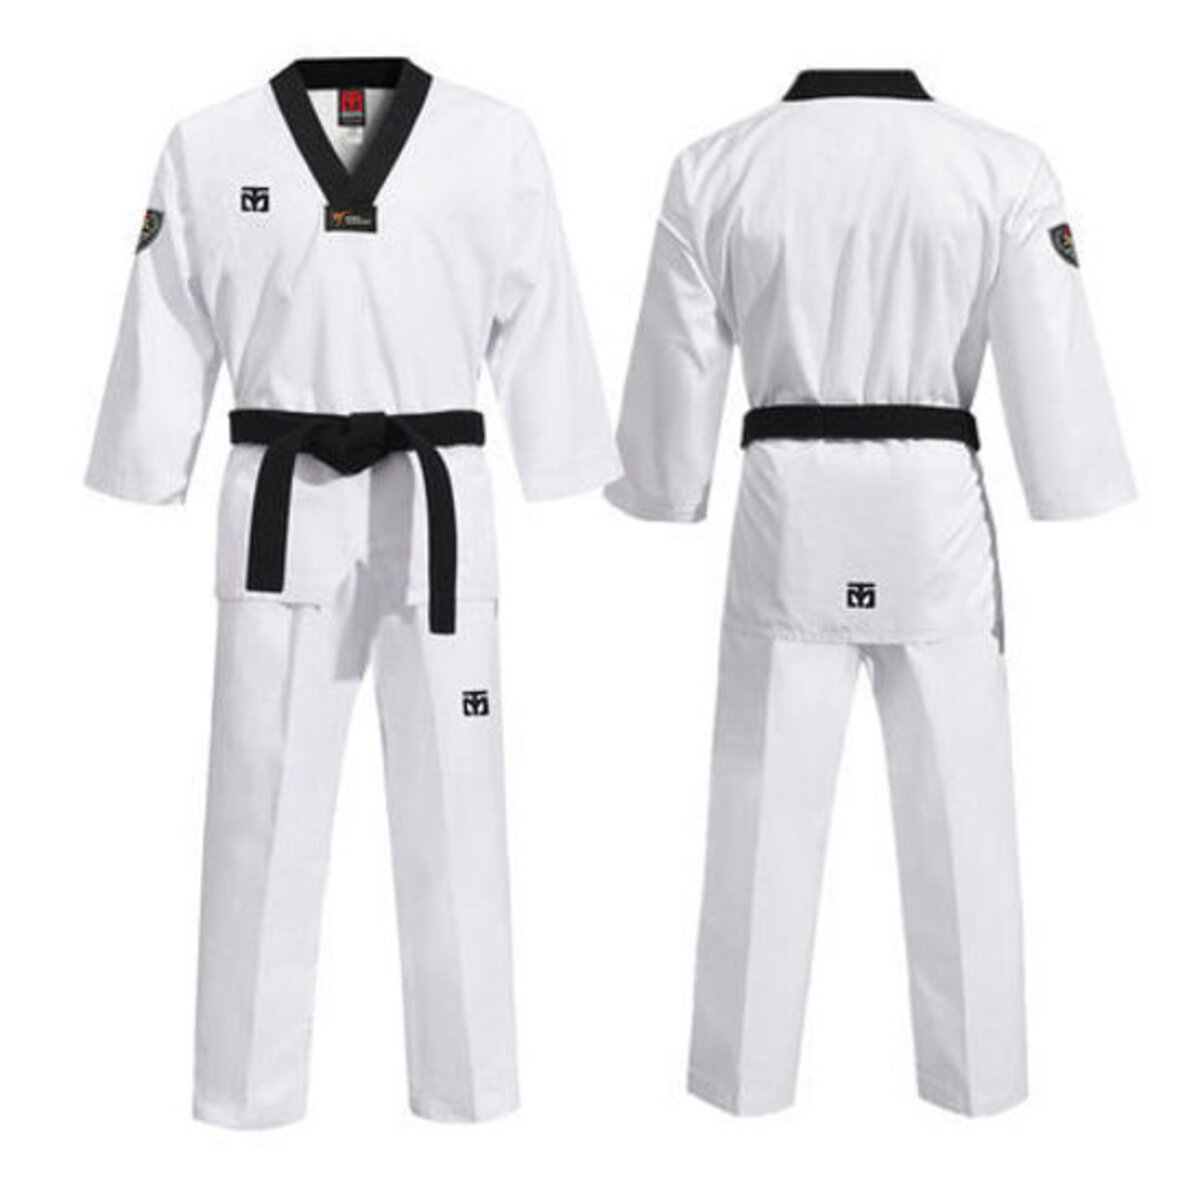 Trang phục Taekwondo cao cấp